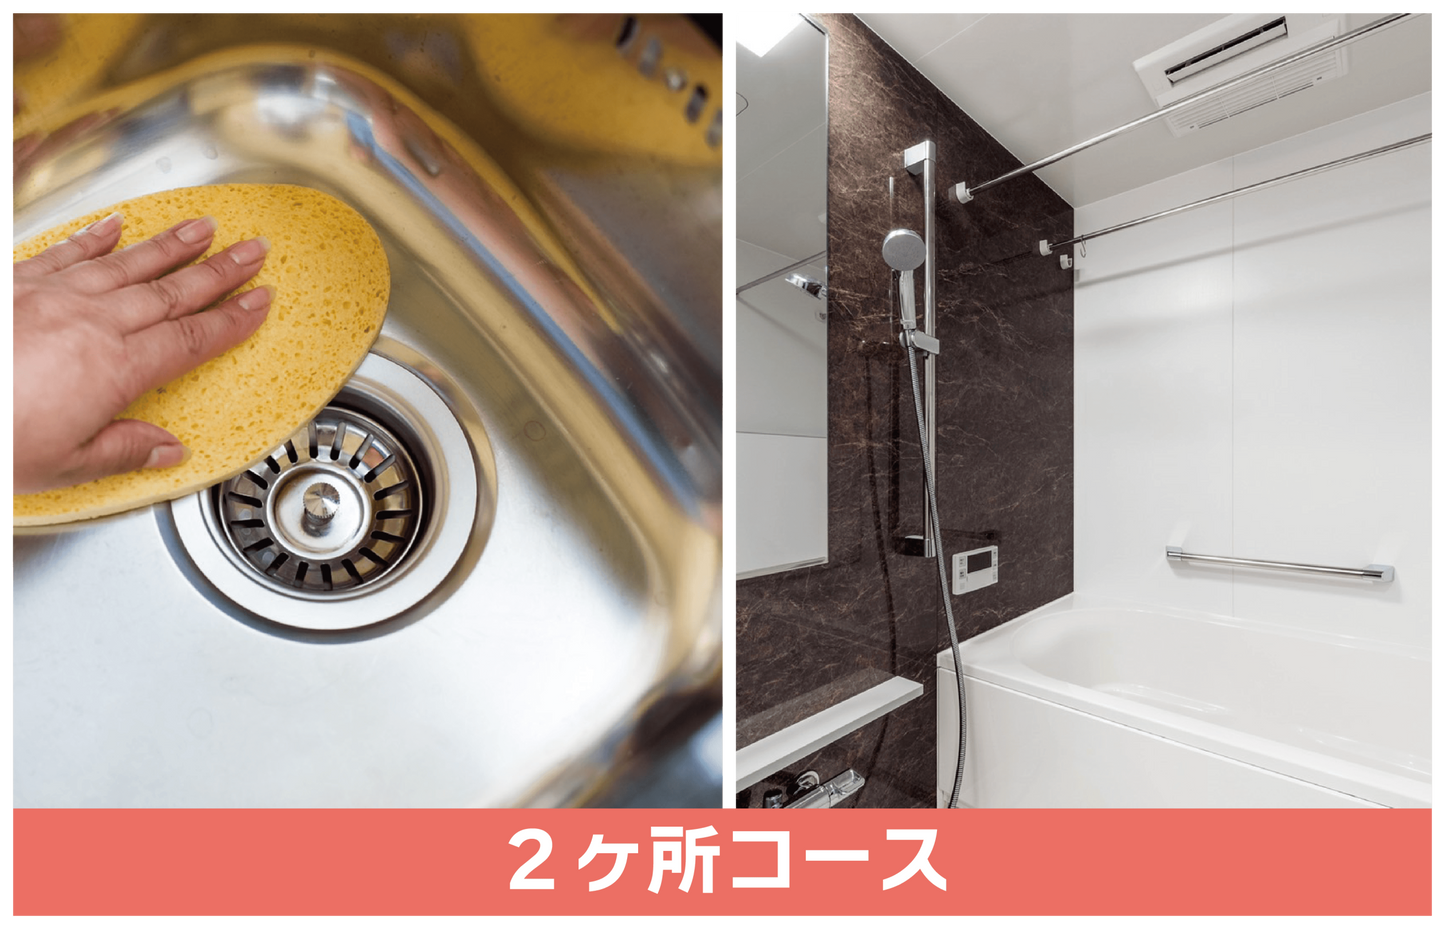 GZOK SHIELD 2カ所コース（浴室+キッチン）3カ月後コーディング 14800円（税抜）【f007】